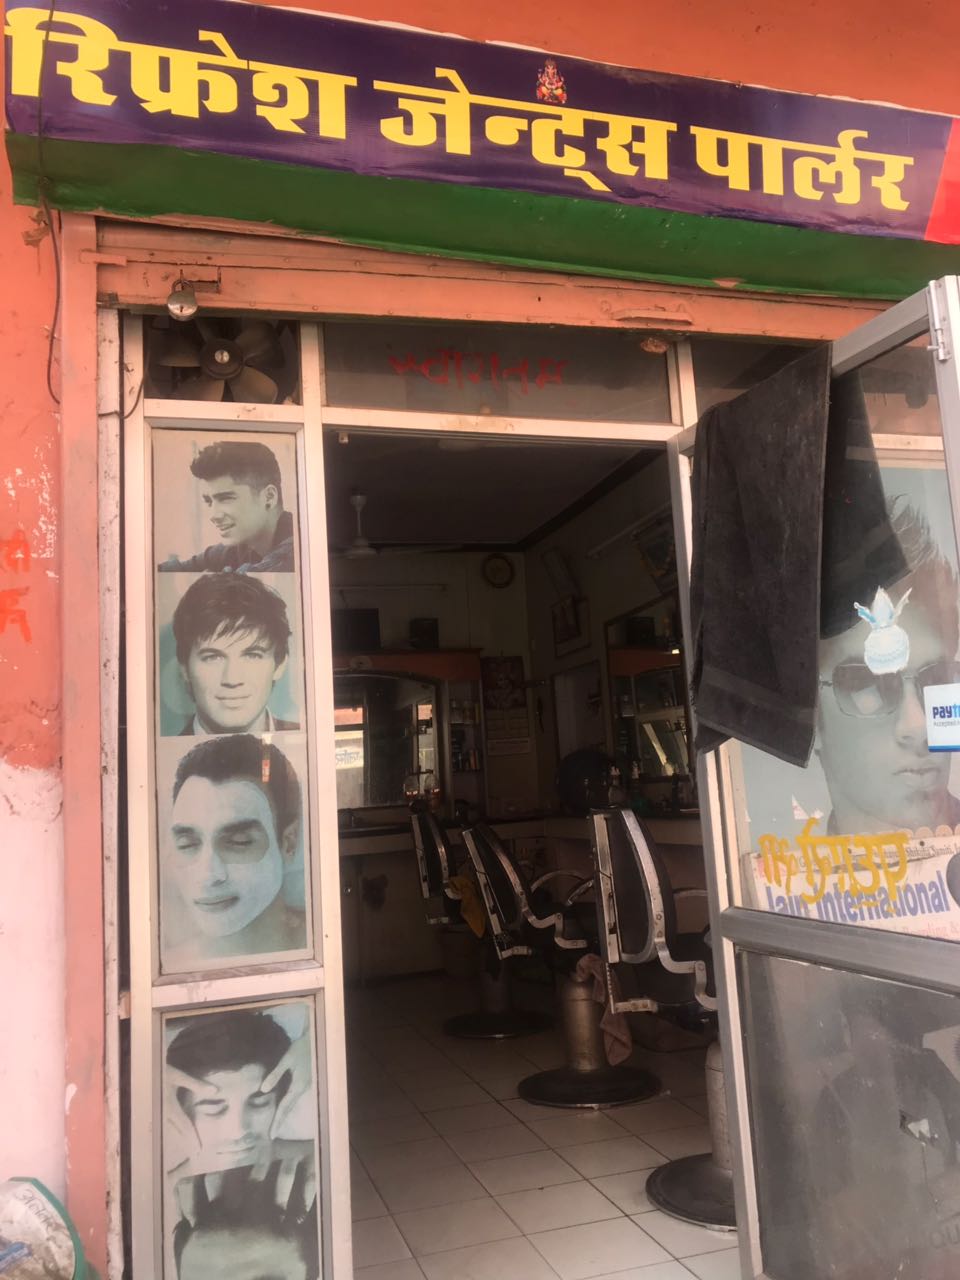 Mr. Nirmal Kumar sain from gali no. 1 adrash bajar tonk phatak jaipur ,Jaipur, Rajasthan, 302015, India 10 years experience in Speciality hair-cutting, colouring and styling | Kayawell